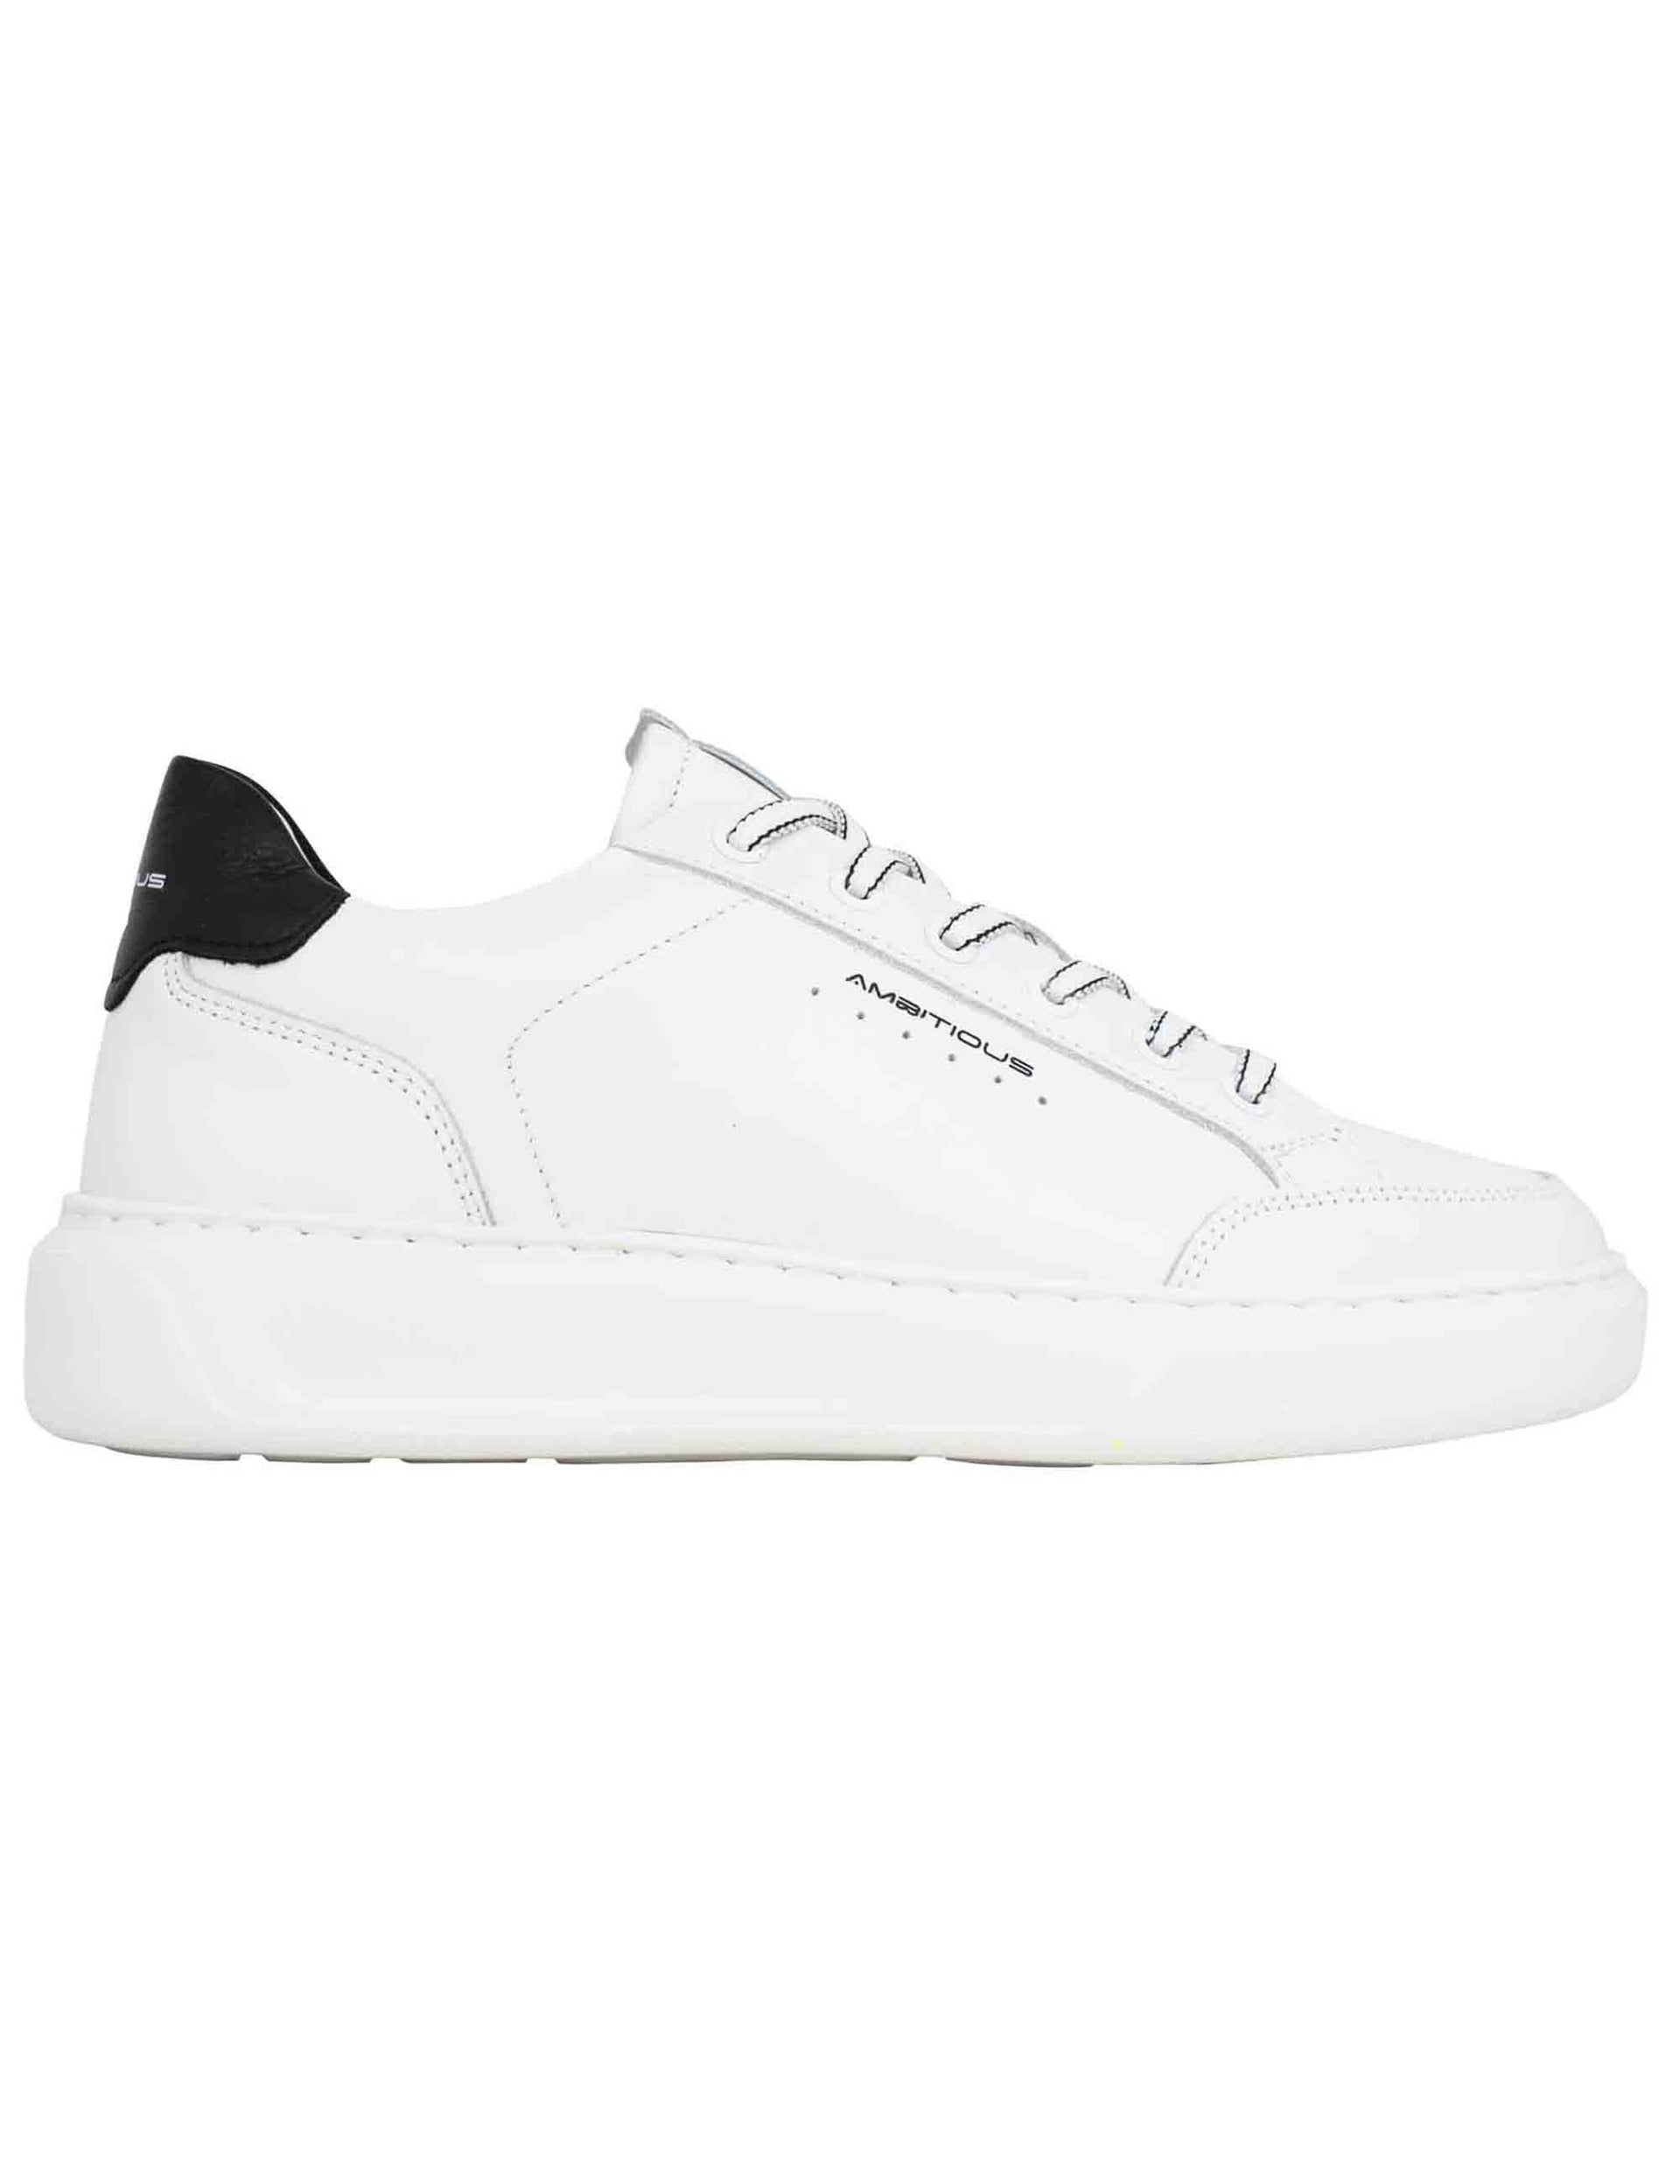 Kit men's sneakers in white leather